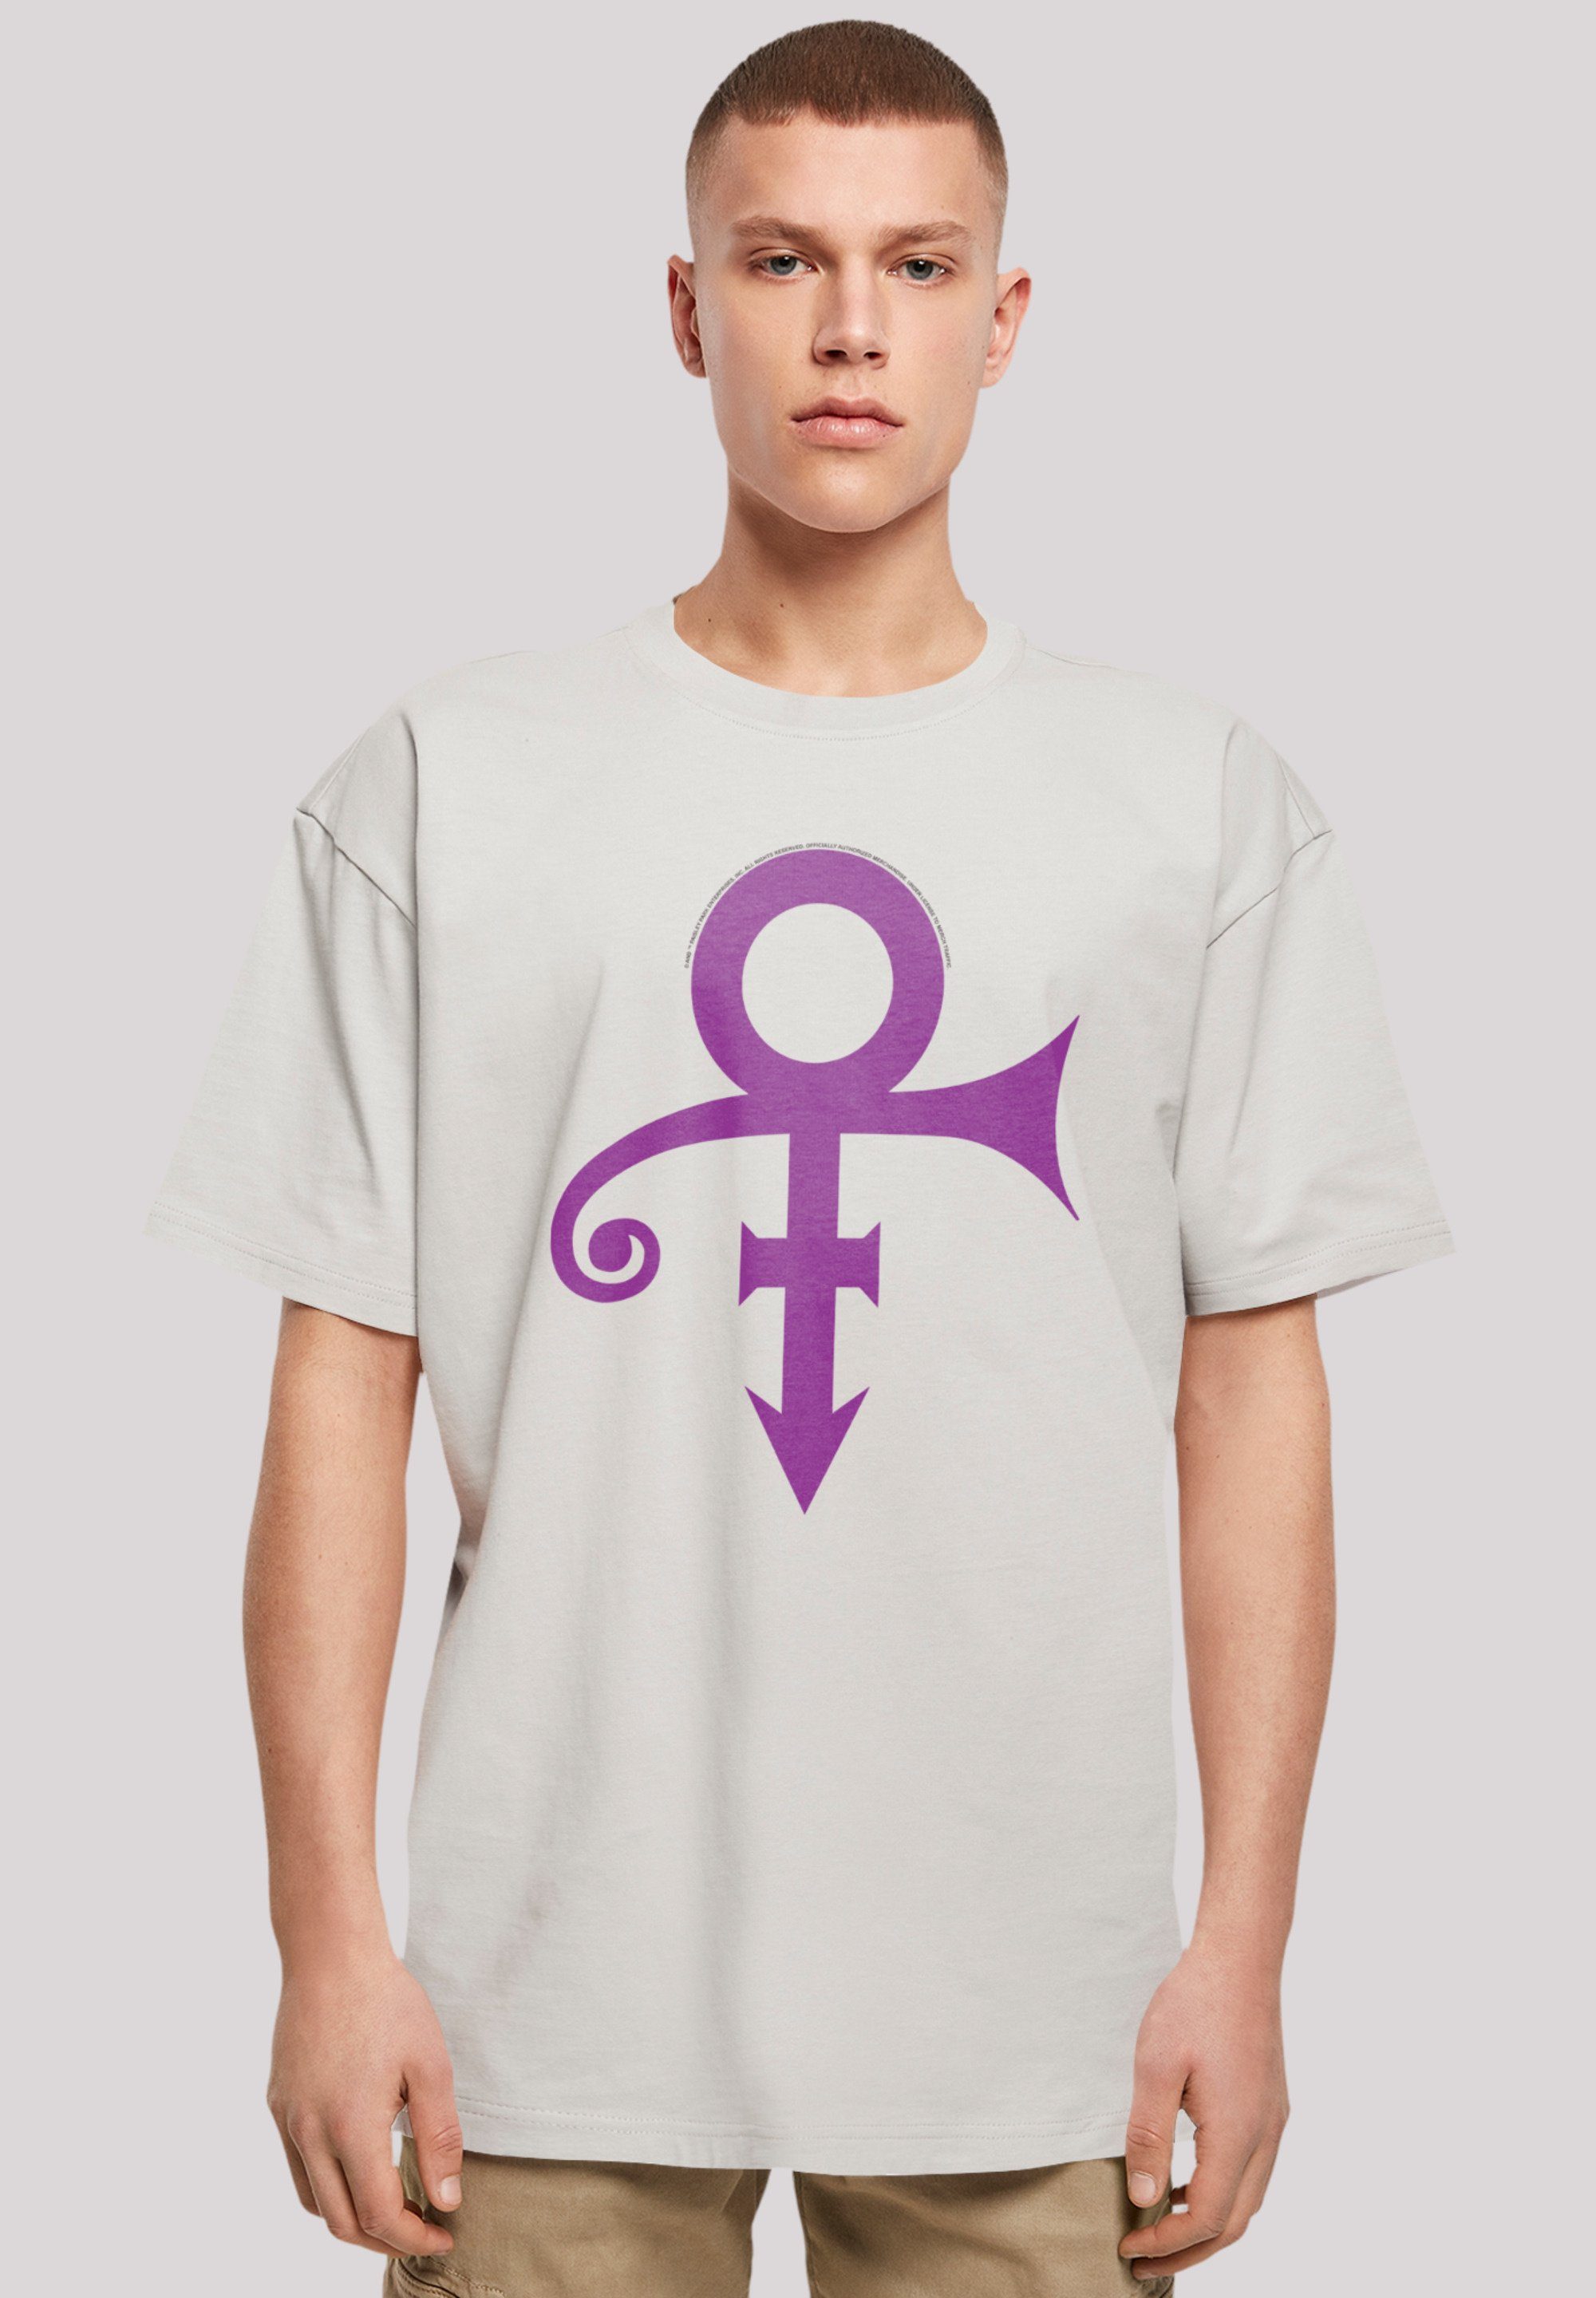 F4NT4STIC T-Shirt Prince Musik Album Logo Premium Qualität, Rock-Musik, Band